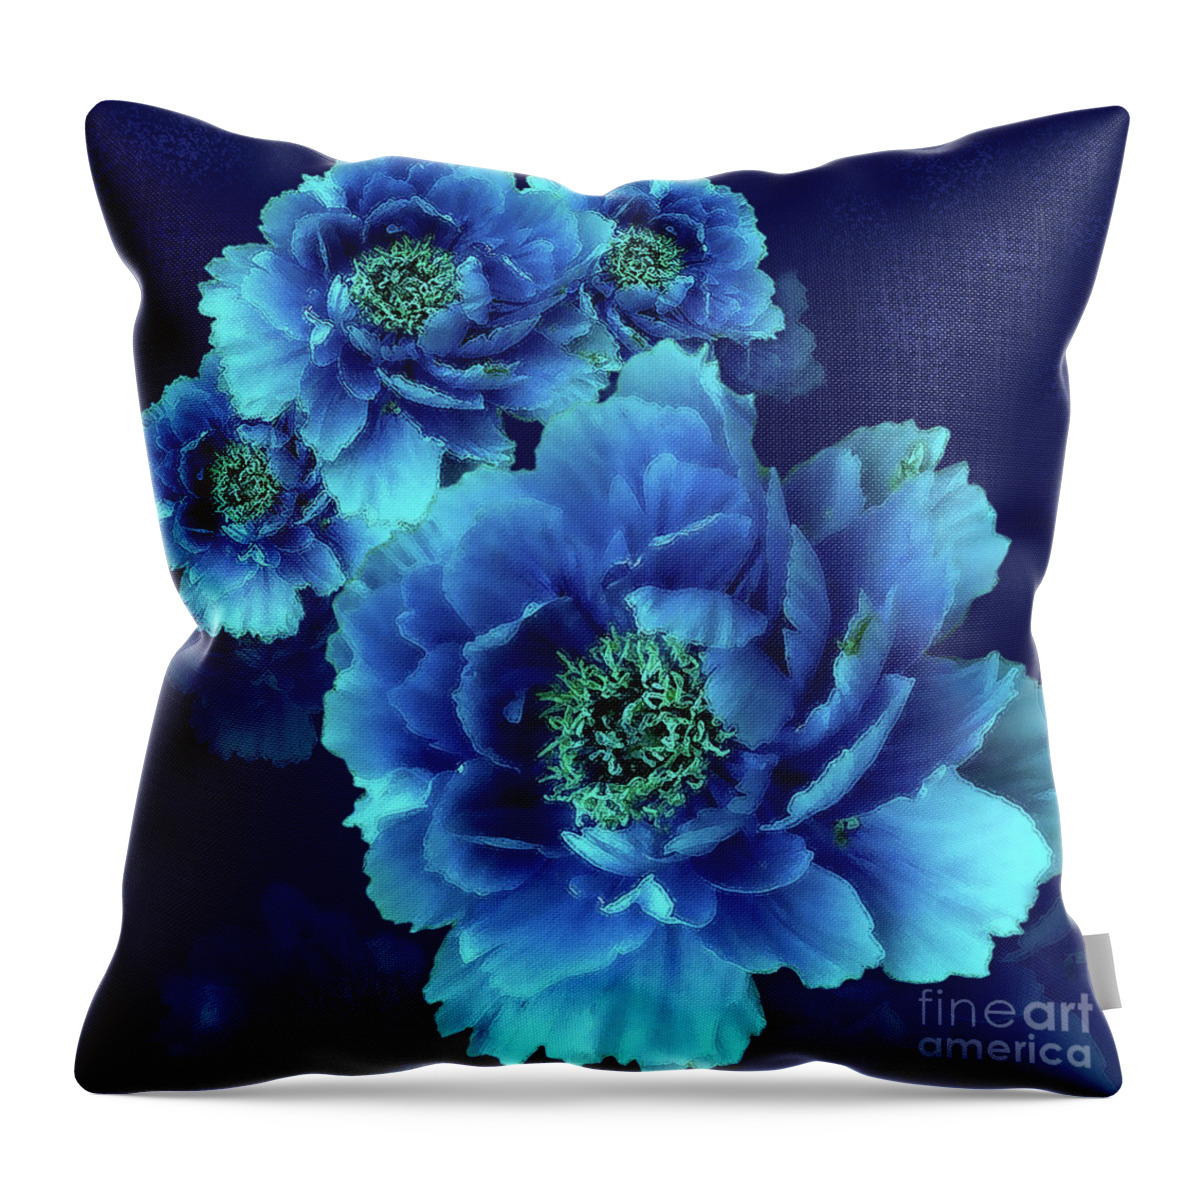 Blue Flowers Throw Pillow featuring the digital art Indigo Blue At Midnight by J Marielle